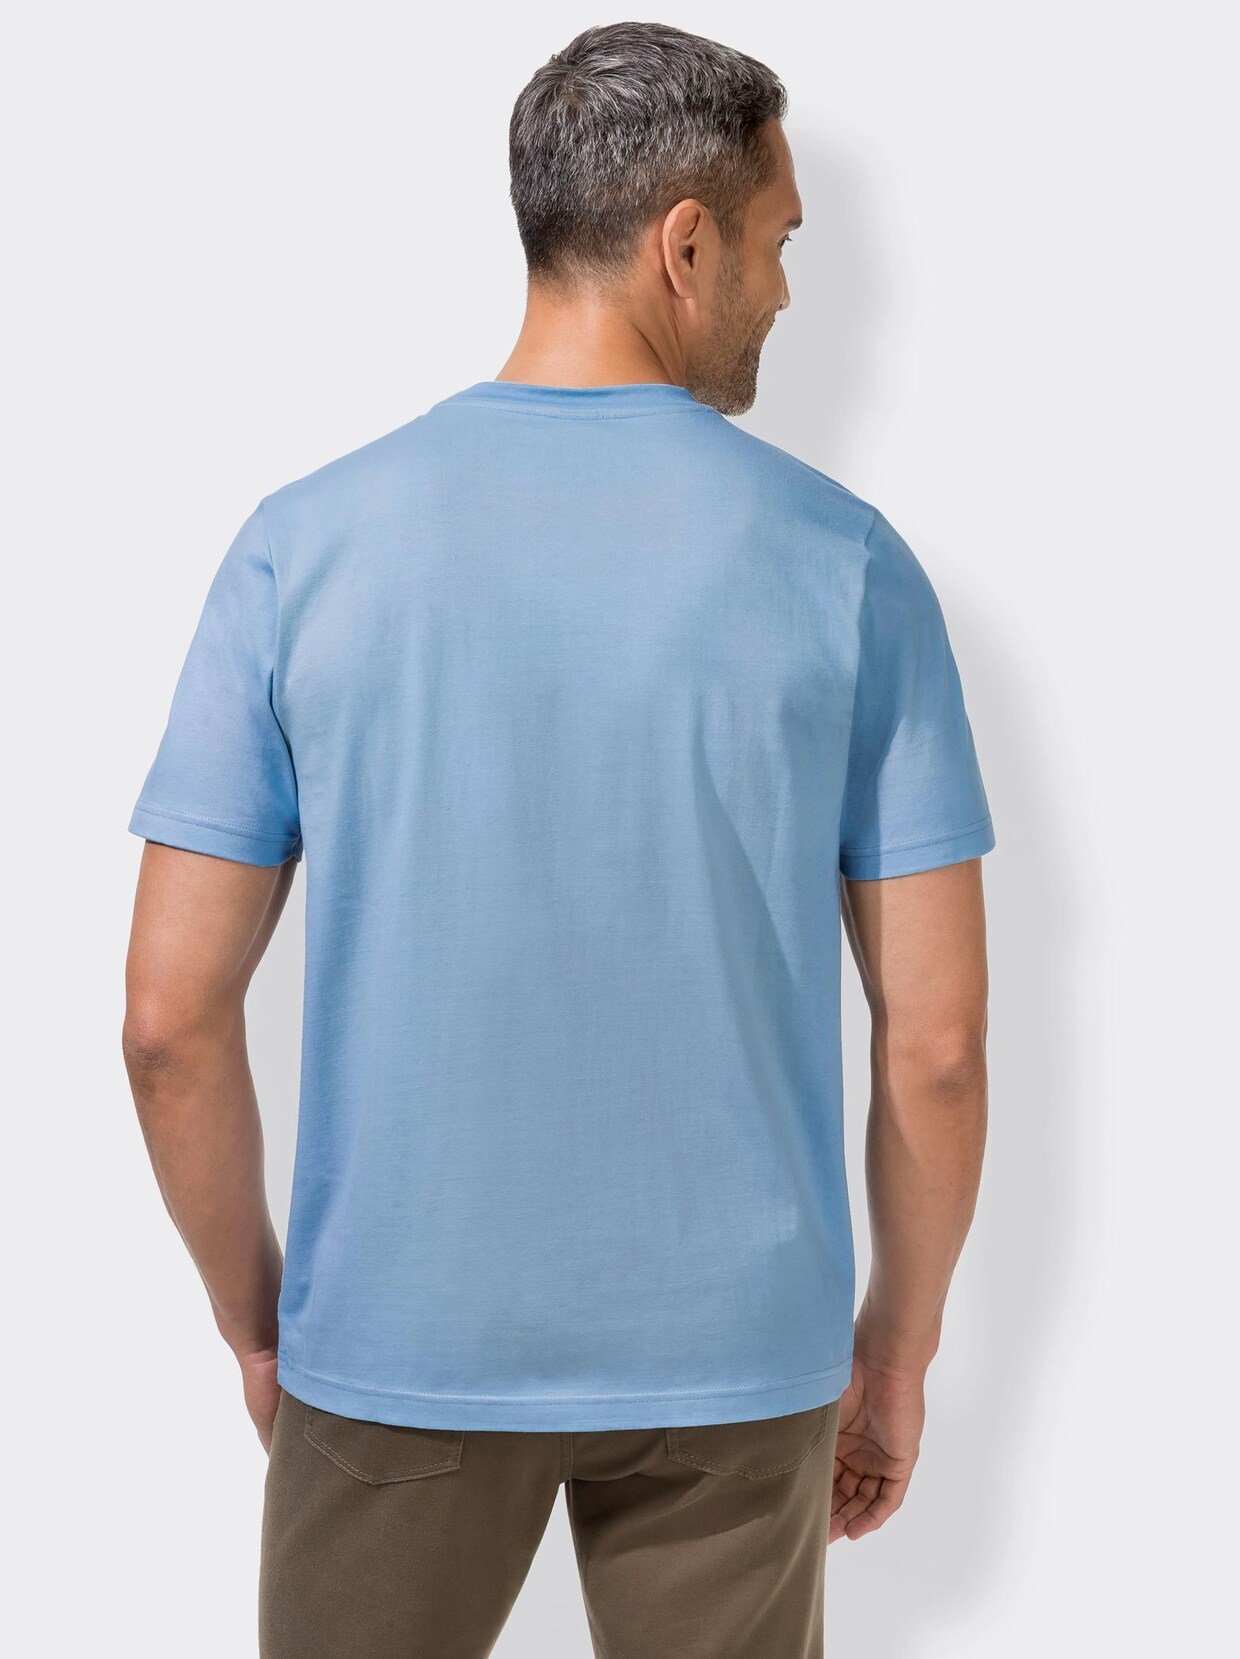 KINGsCLUB Shirt - anthrazit + blau + weiß